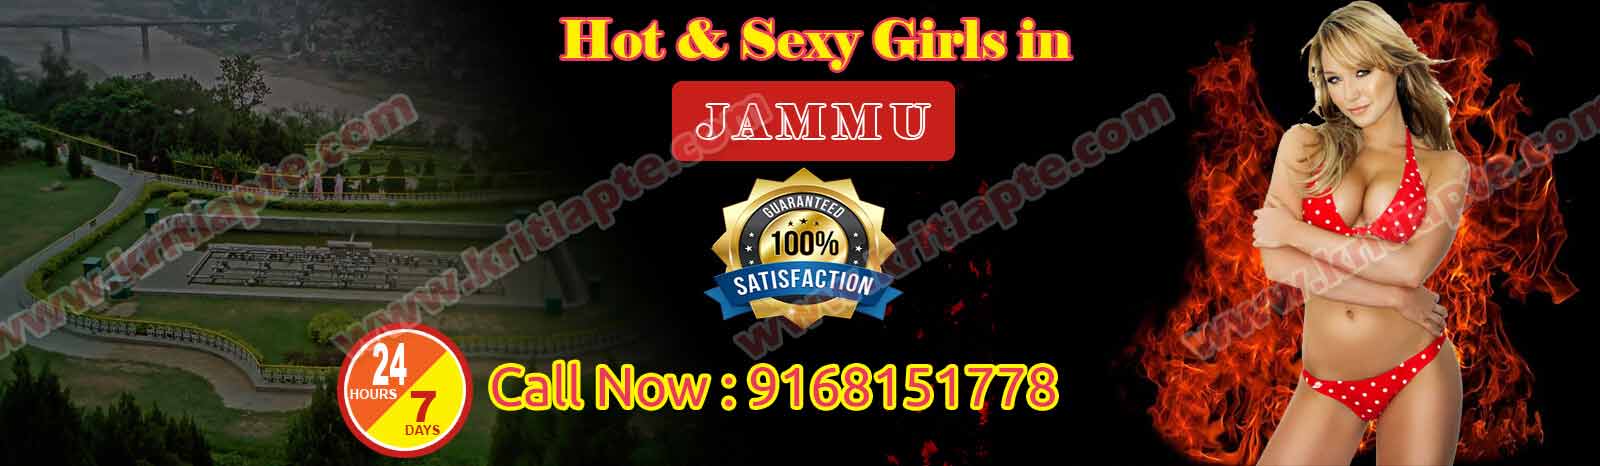 Call Girls Services jammu